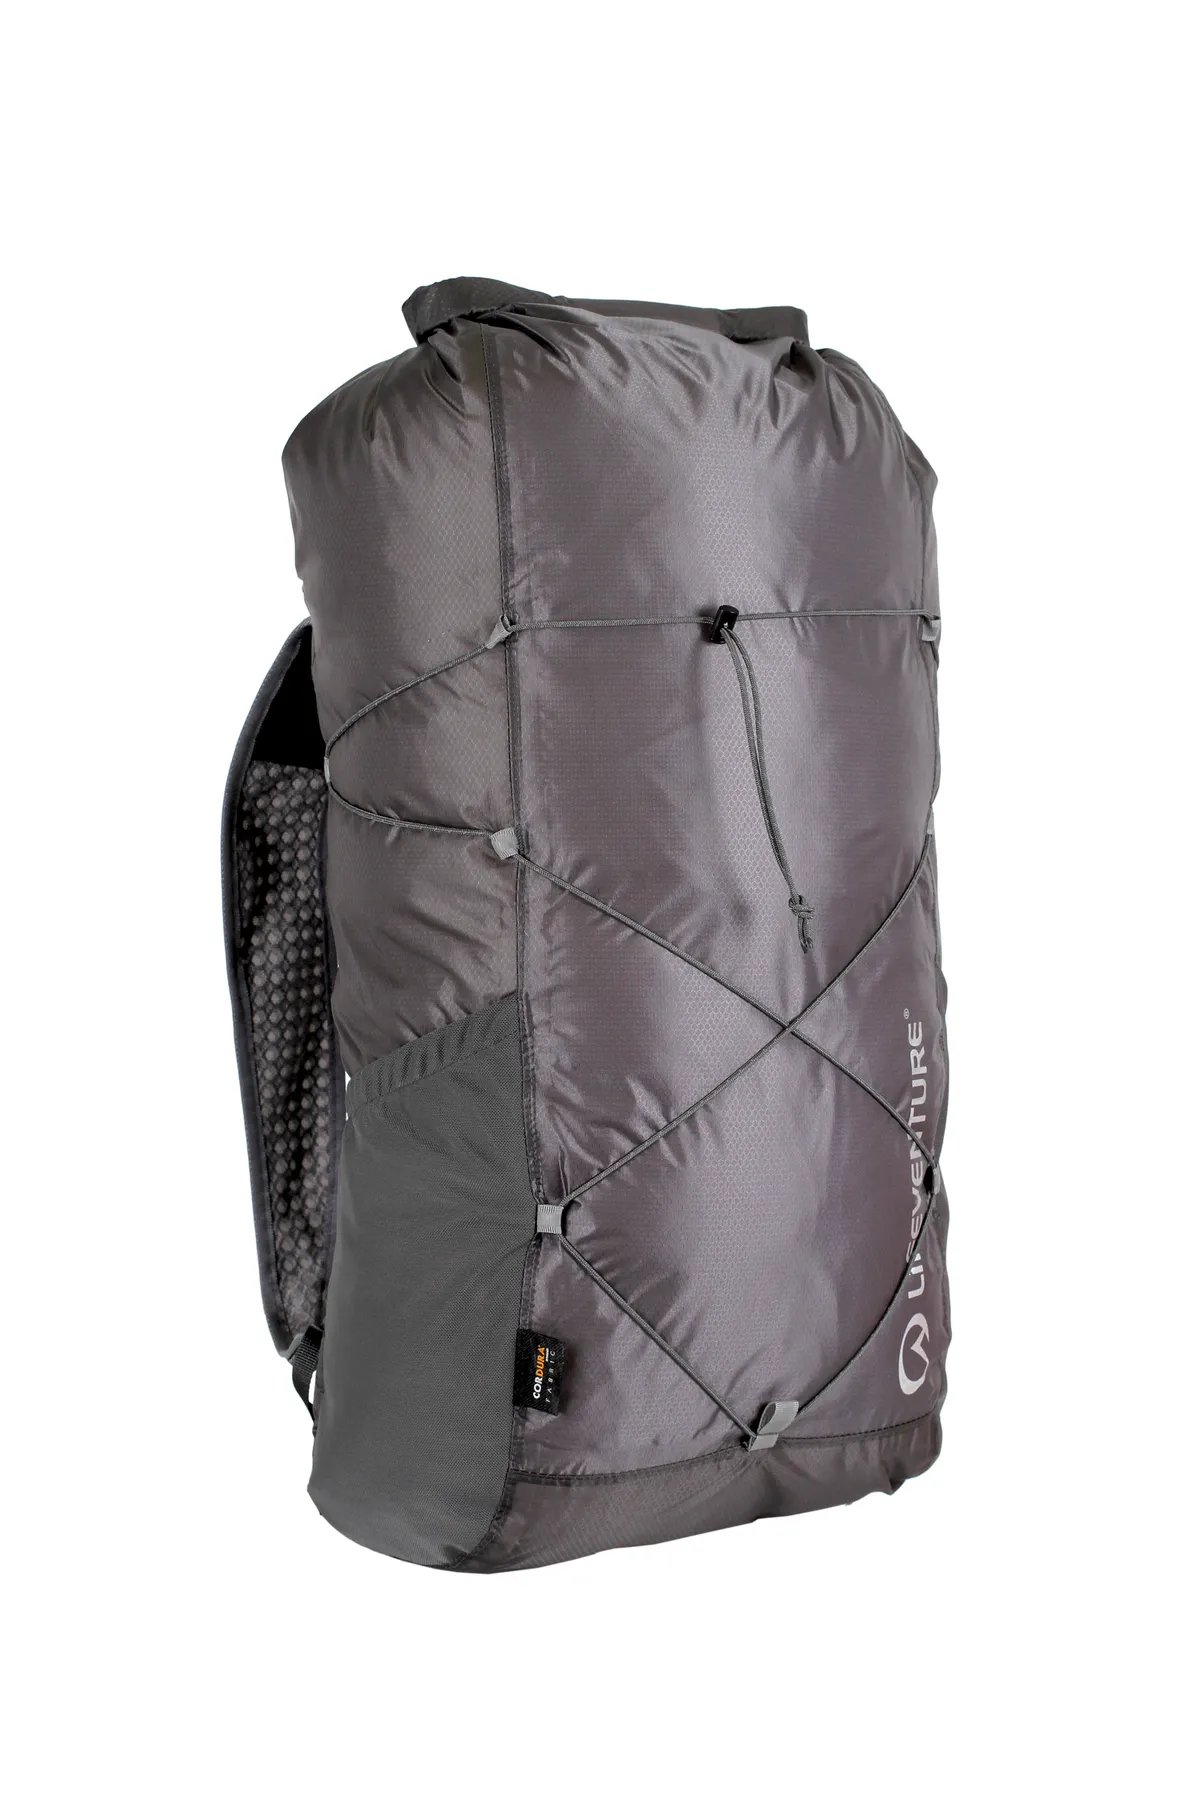 Lifeventure Packable Waterproof Backpack 22L